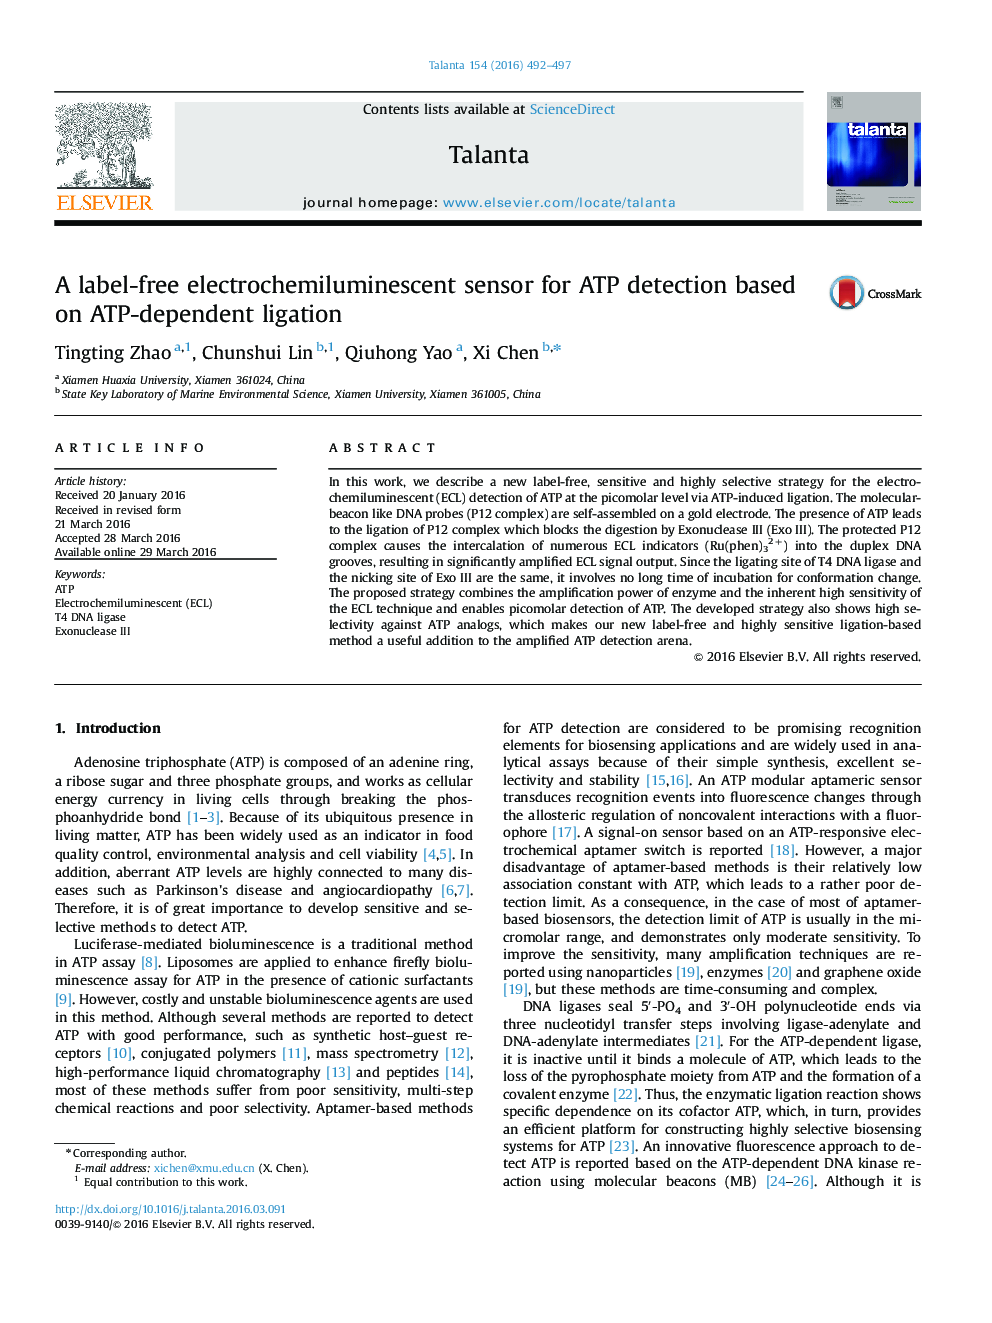 A label-free electrochemiluminescent sensor for ATP detection based on ATP-dependent ligation